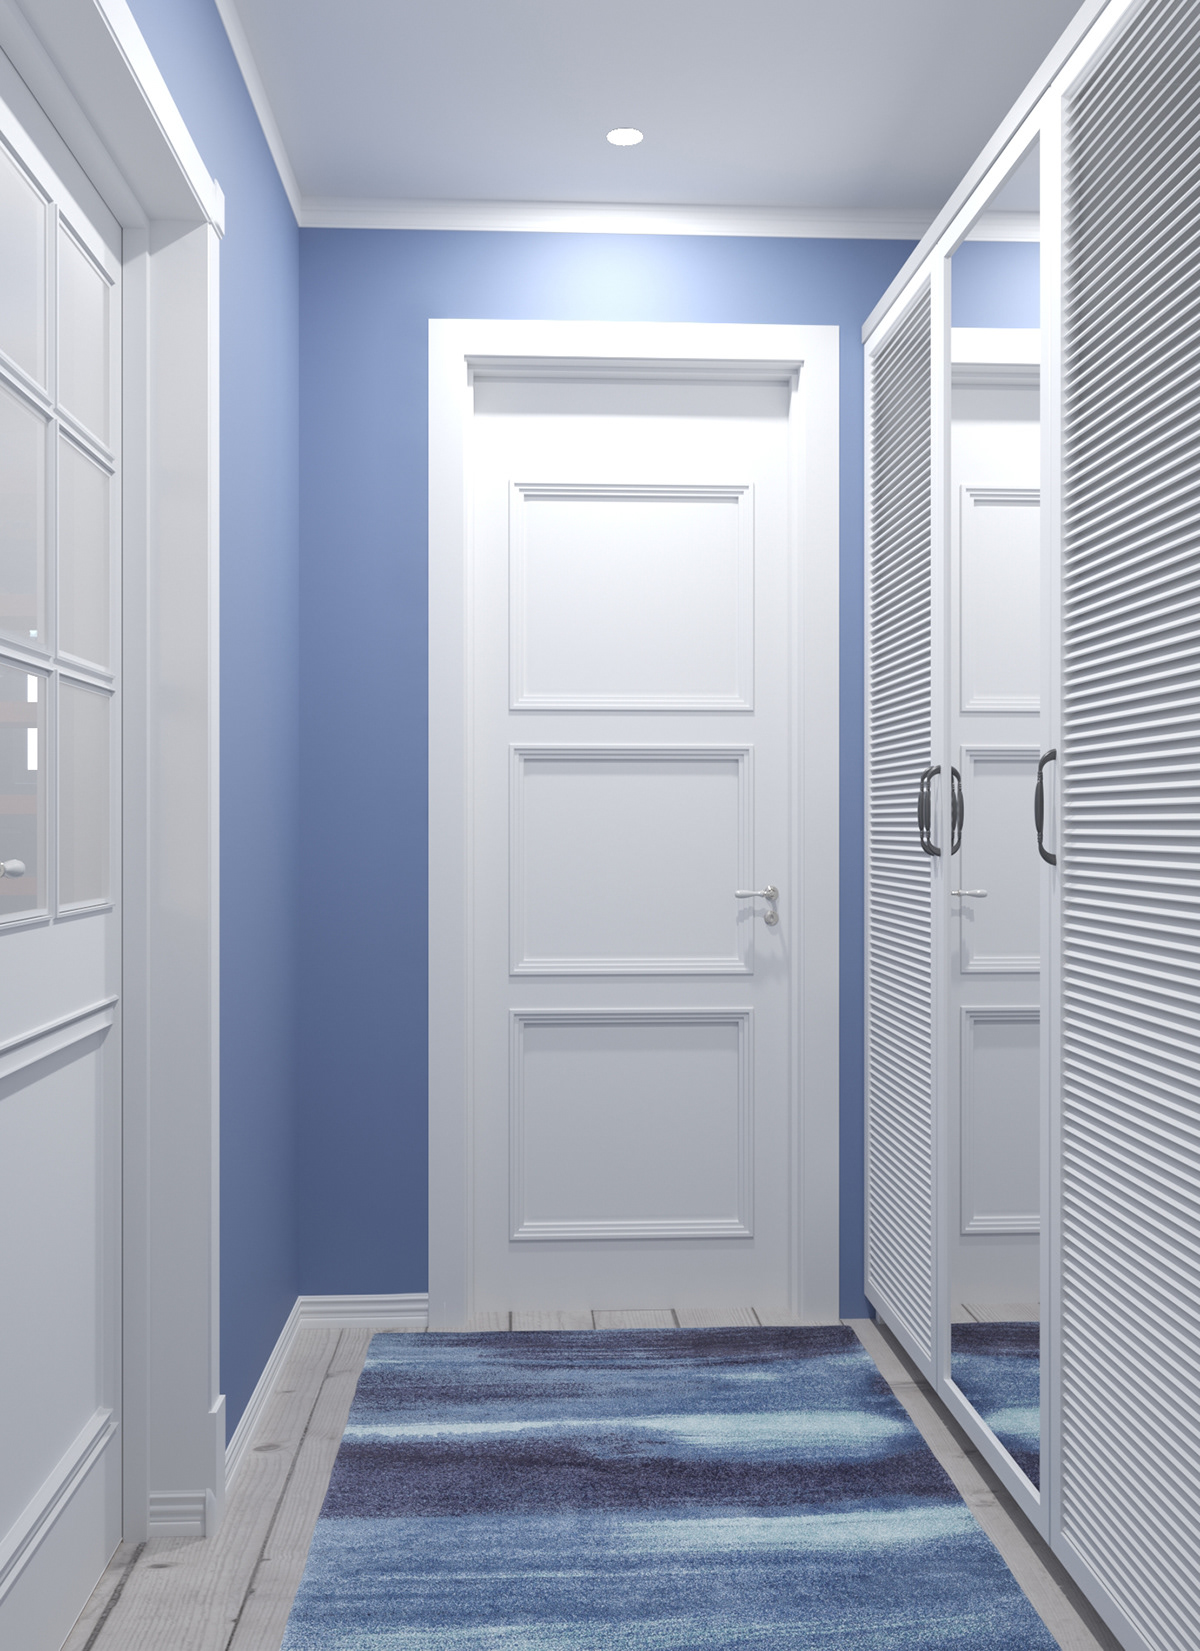 3D 3dvisualization design house Interior scandinavianstyle Villa rawrmoster